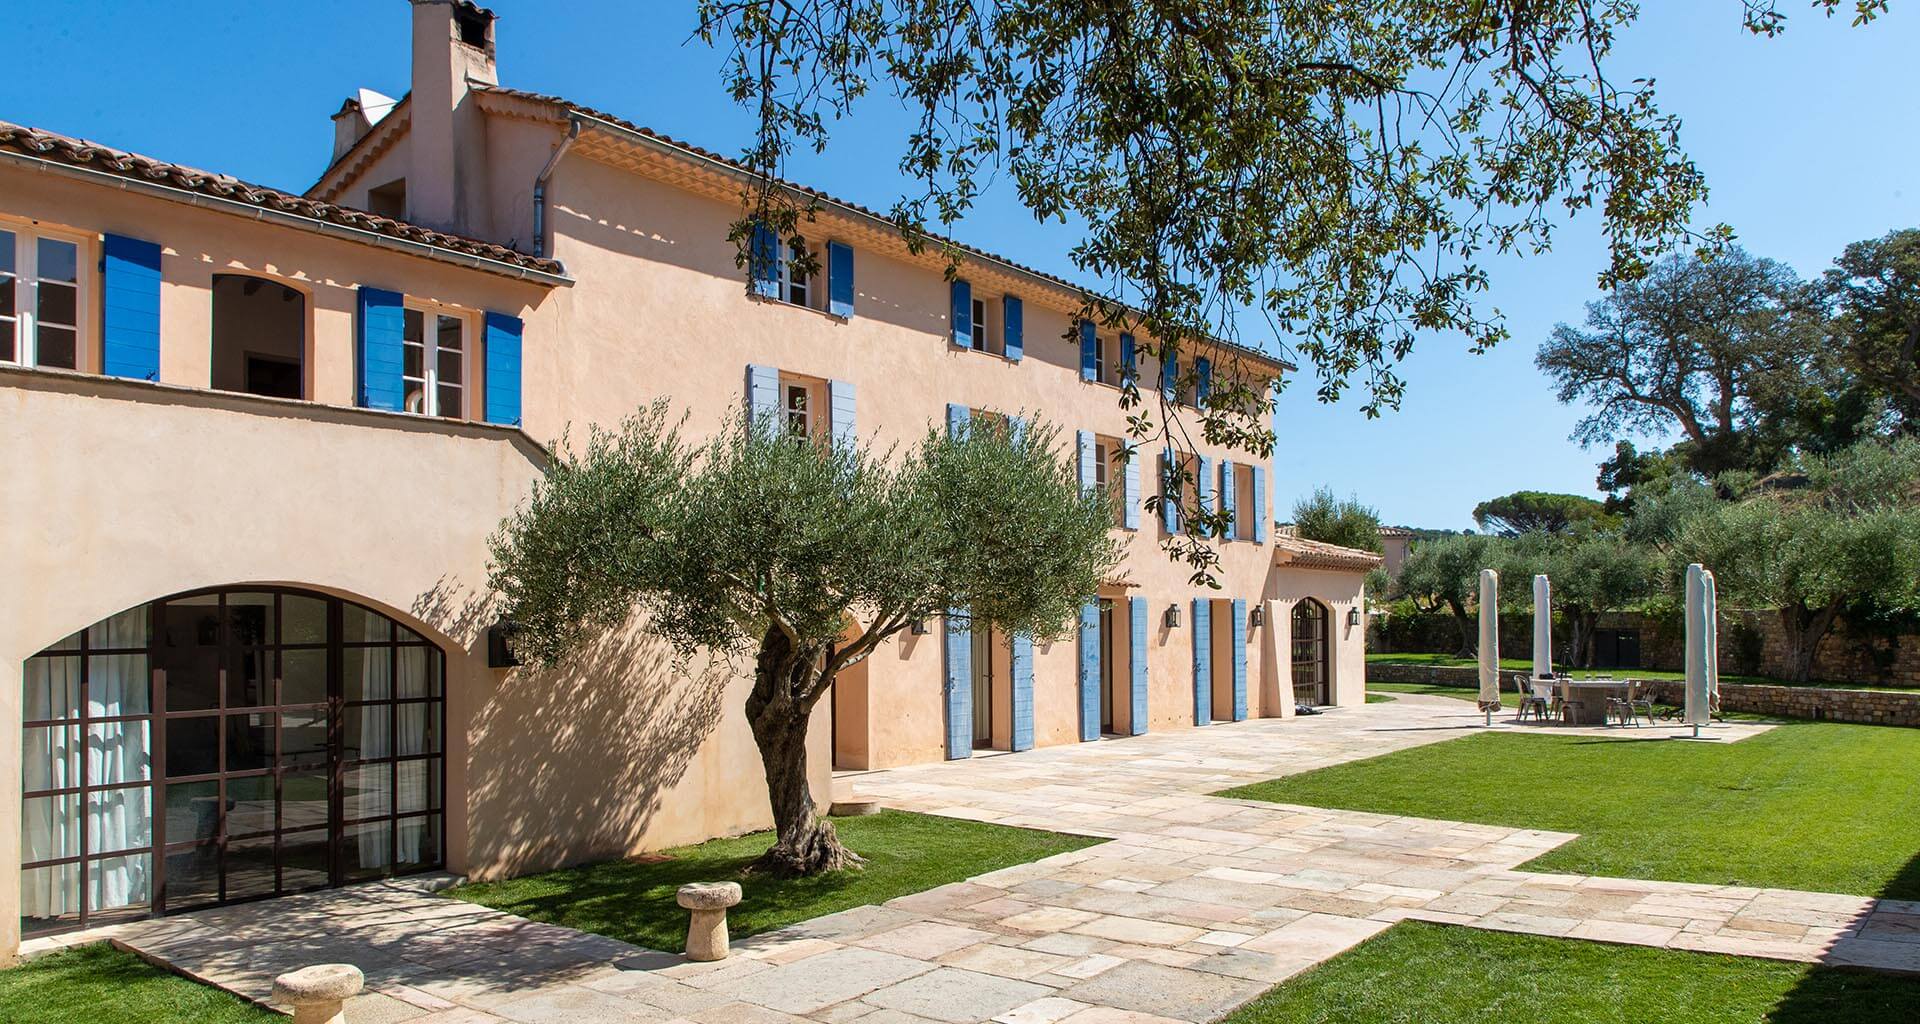 St Tropez & Surrounding Area Villa Gallery